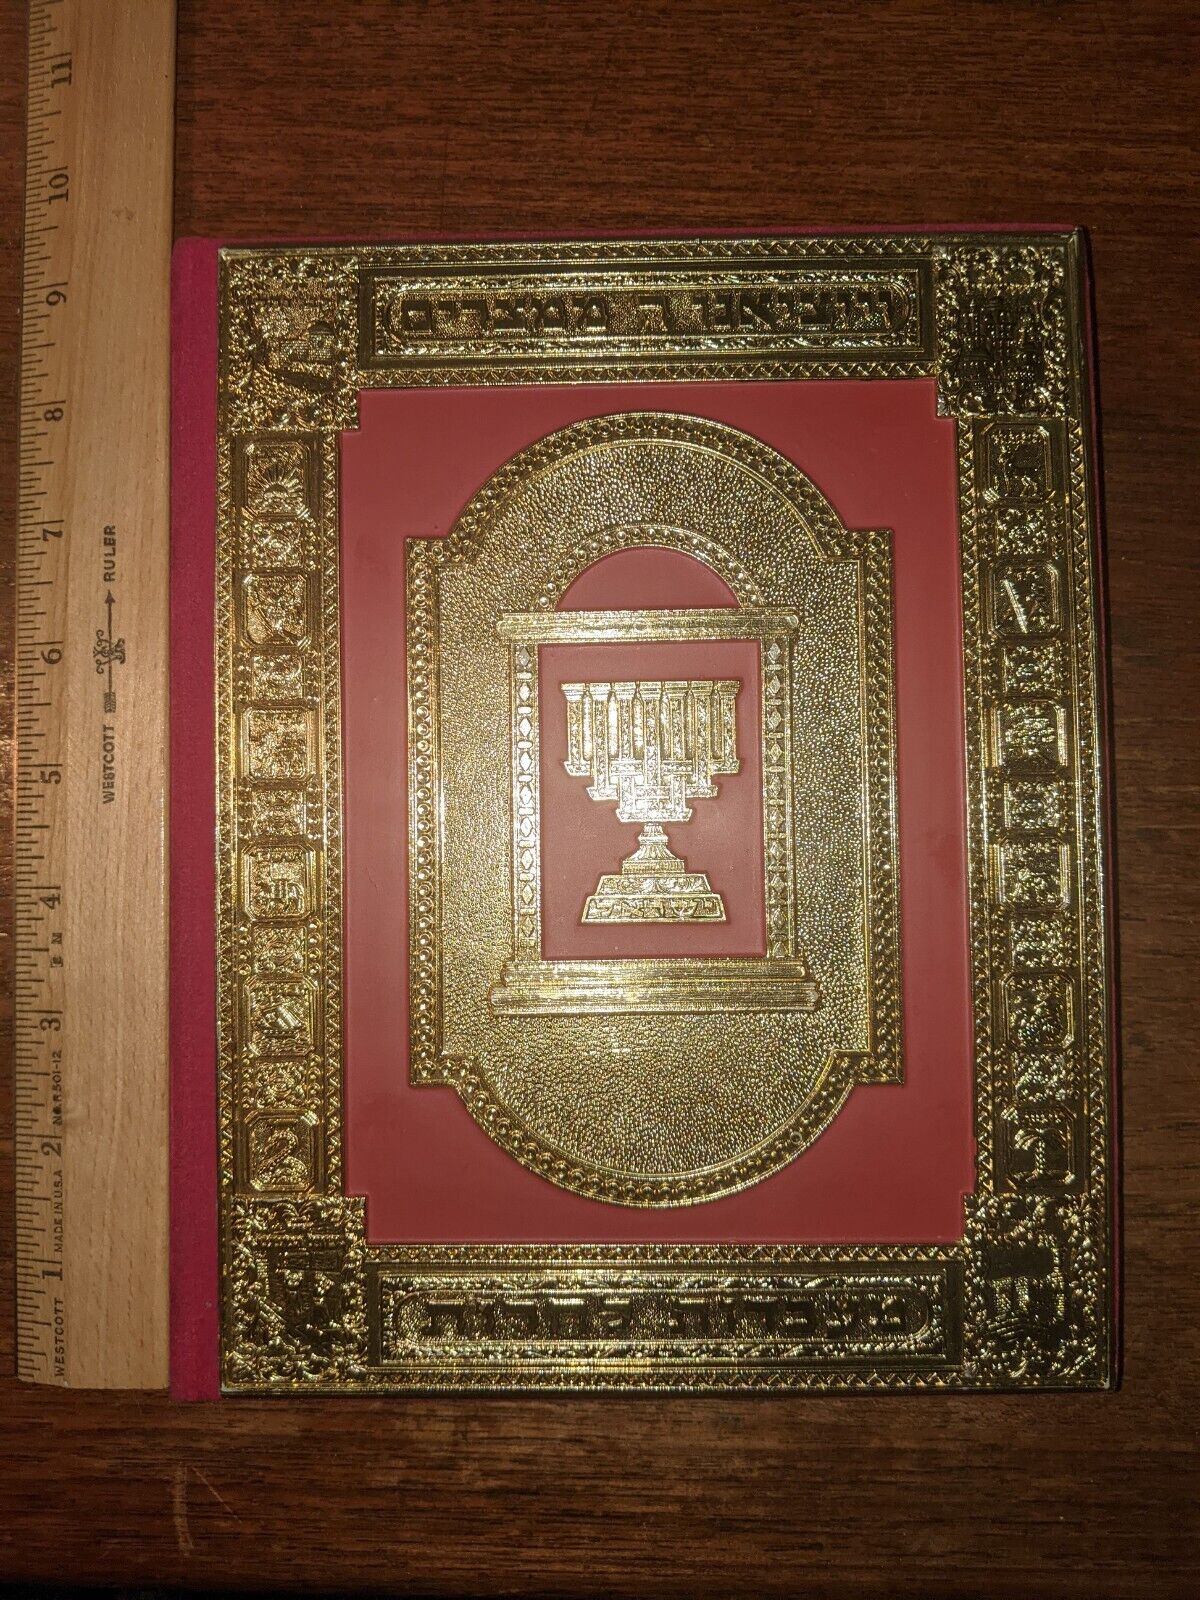 The Haggadah arthur szyk cecil roth gold red hc rare Heb / Eng Massadah Passover